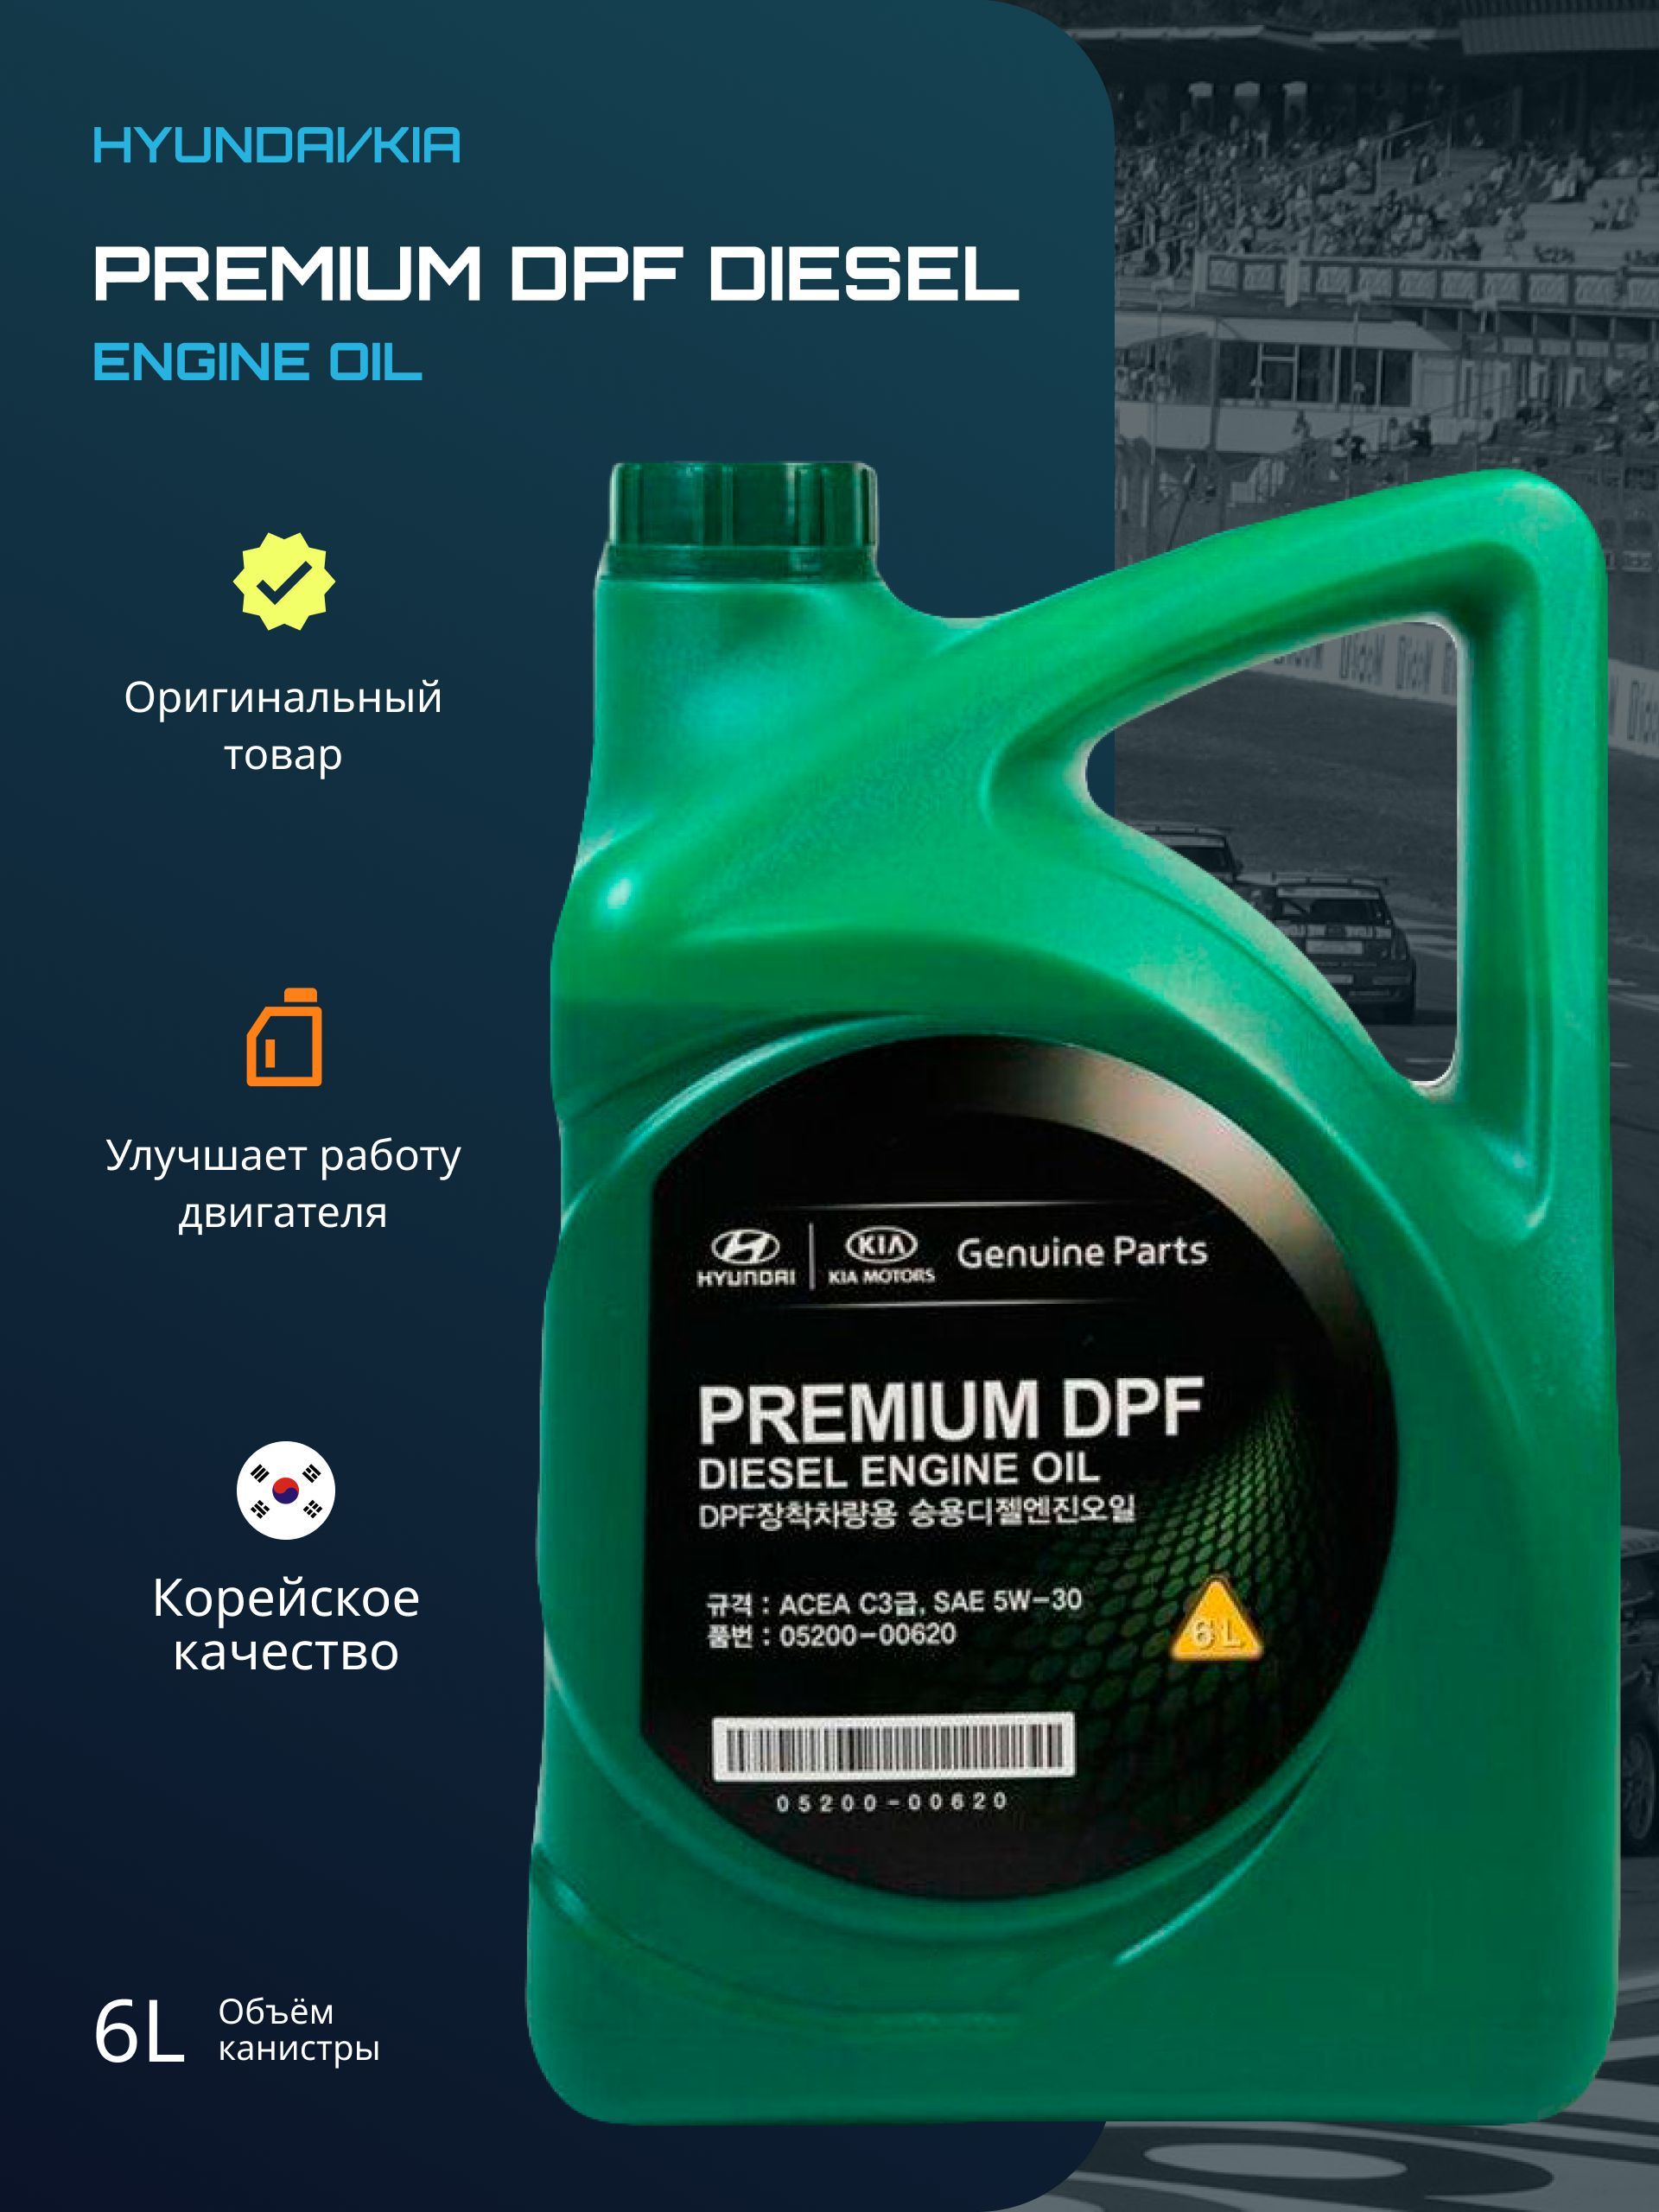 Моторное масло premium dpf diesel. Hyundai Premium DPF Diesel. 0520000620 Hyundai-Kia масло мотор. 6л. Prem. DPF Diesel 5w-30. Как расшифровать дату производства масла Kia Premium DPF Diesel.